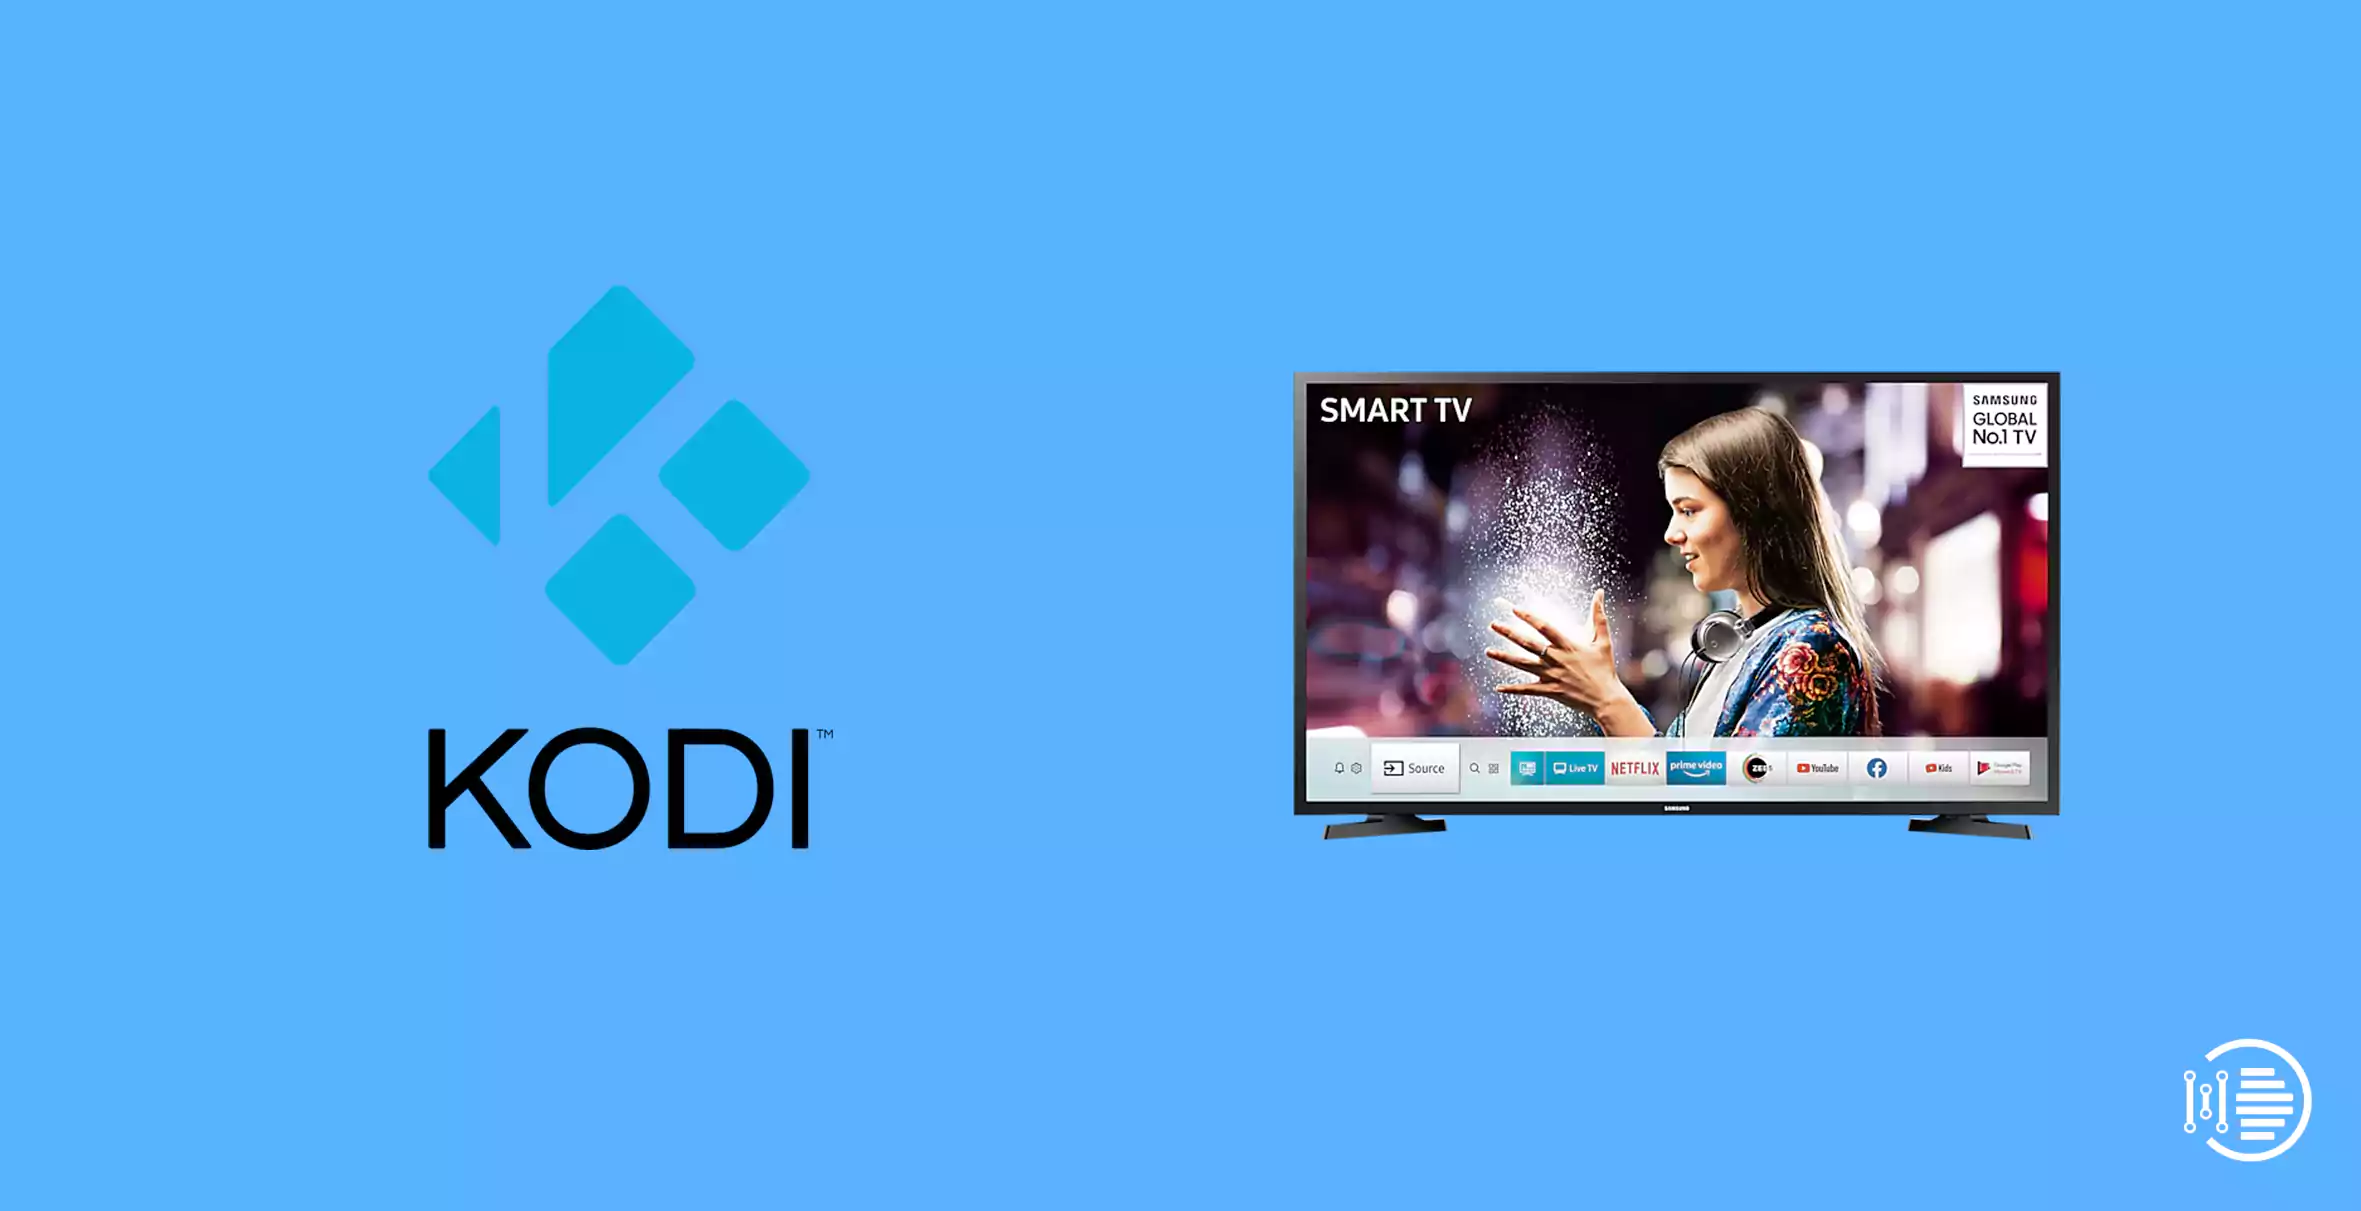 How to Install Kodi on Sharp Smart TV